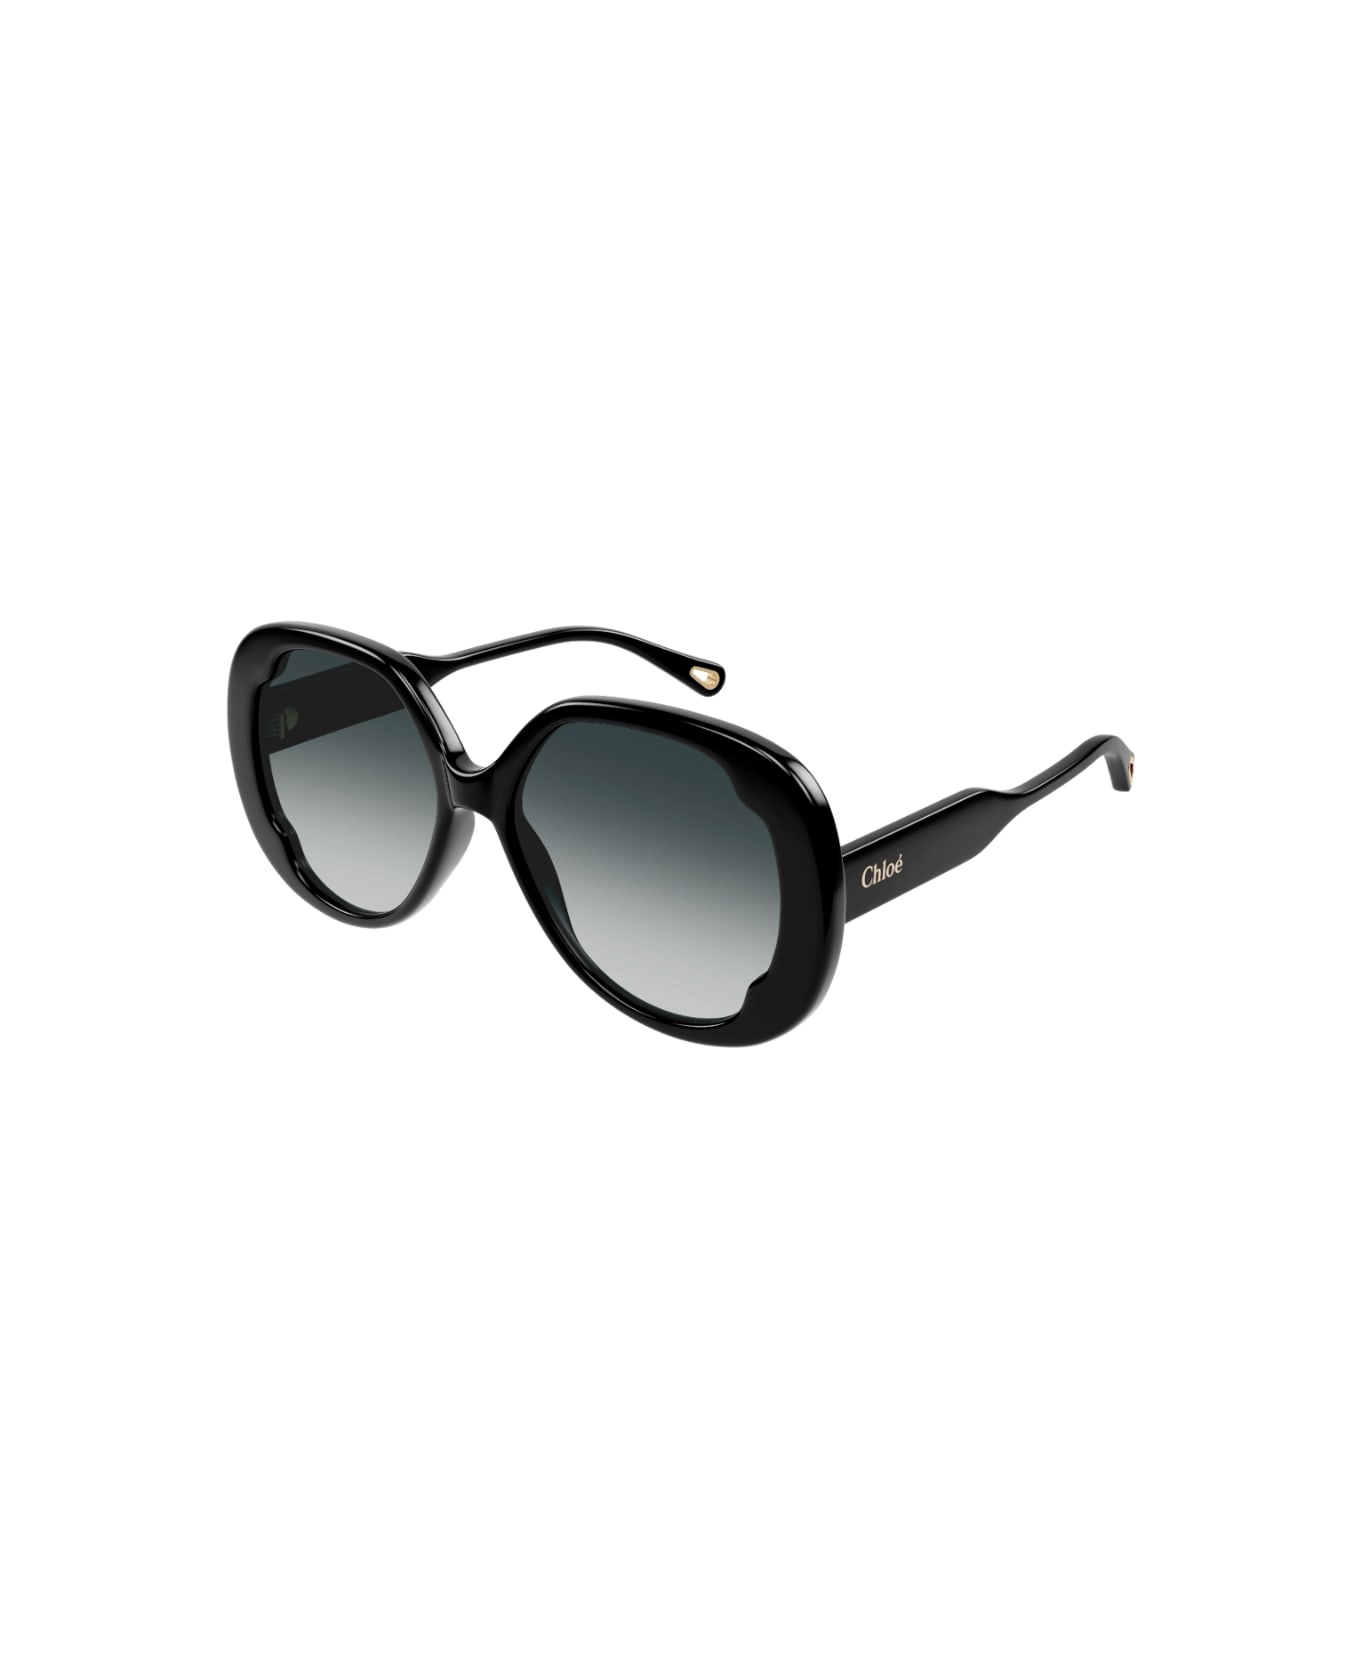 Chloé Eyewear CH0195s 001 Sunglasses